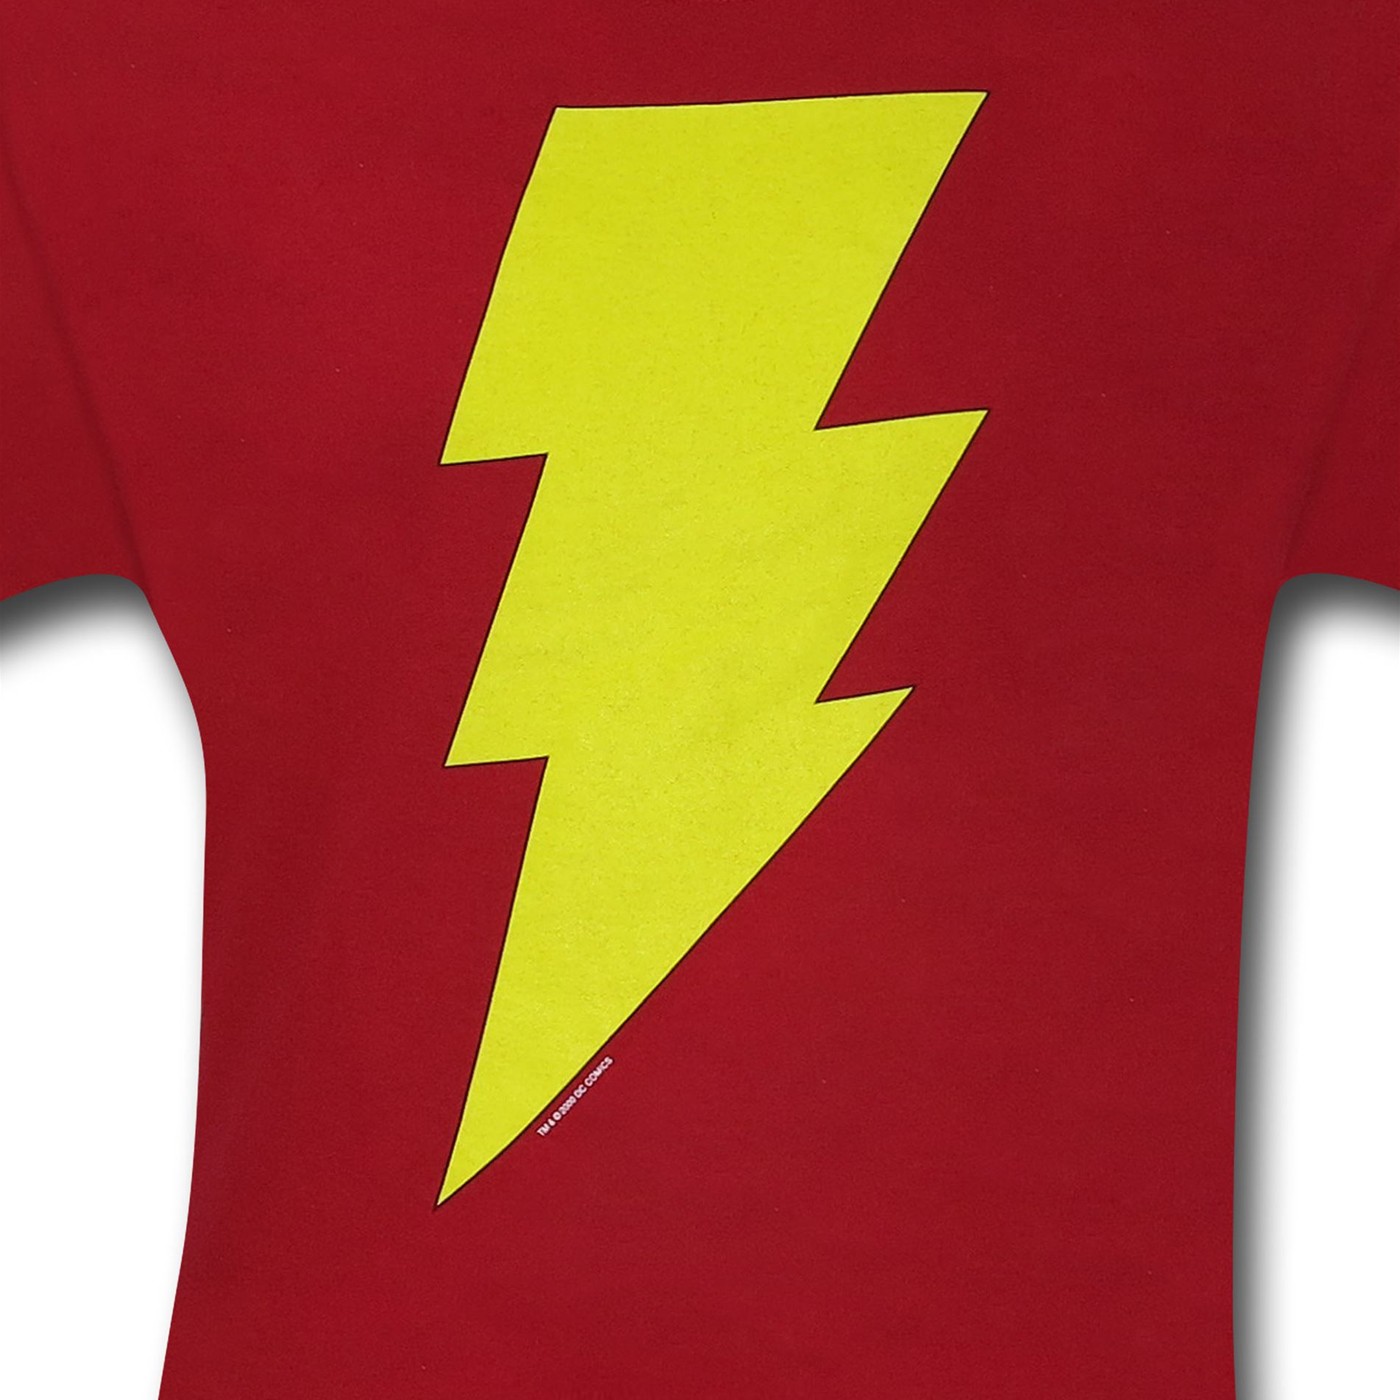 Shazam Symbol Red T-Shirt